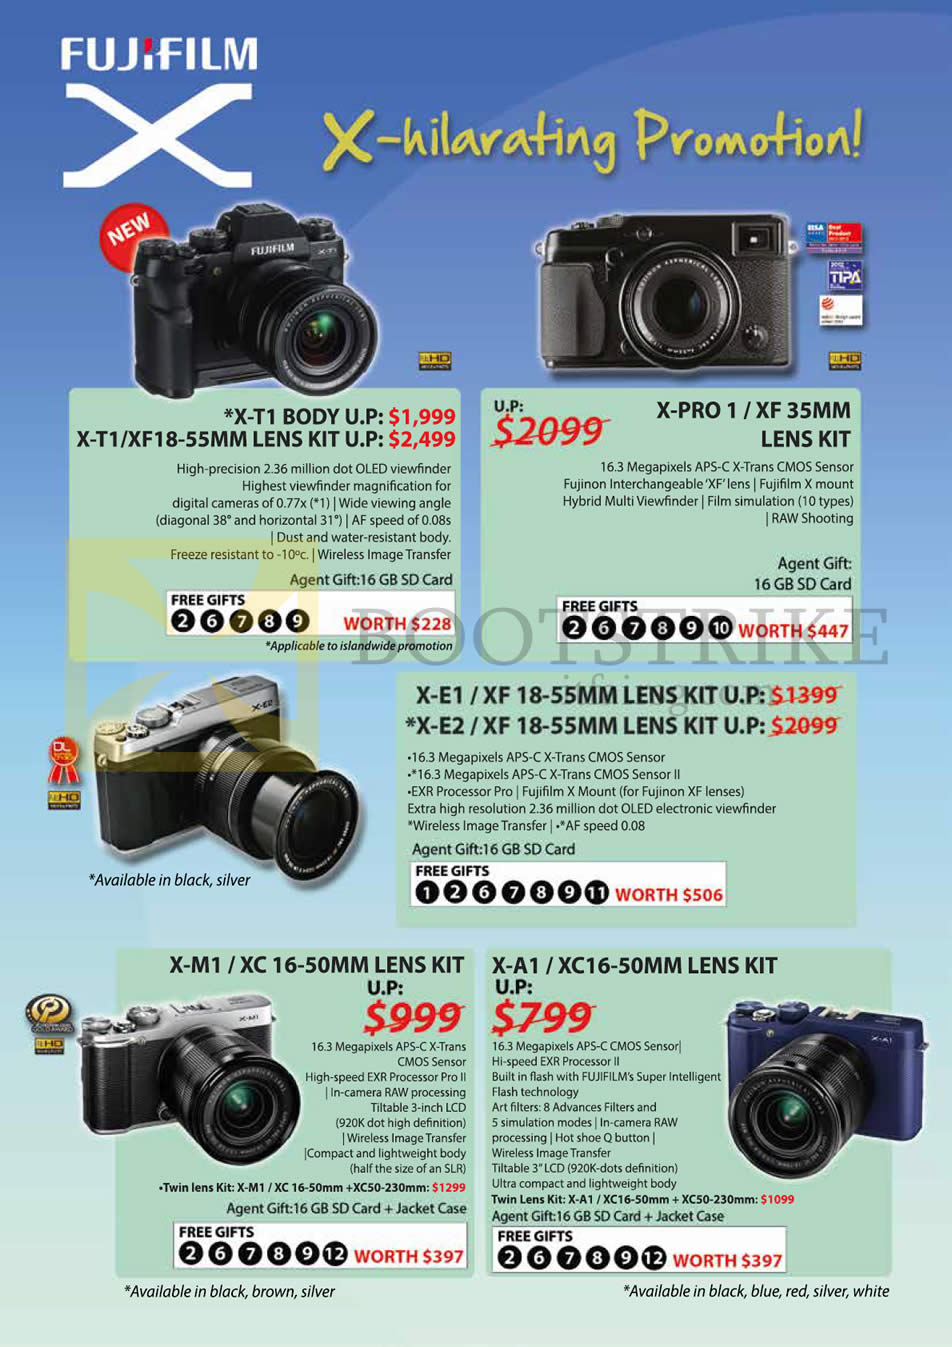 IT SHOW 2014 price list image brochure of Fujifilm Digital Cameras (No Prices) X-T1, X-PRO1, E-E1, X-E2, X-M1, X-A1